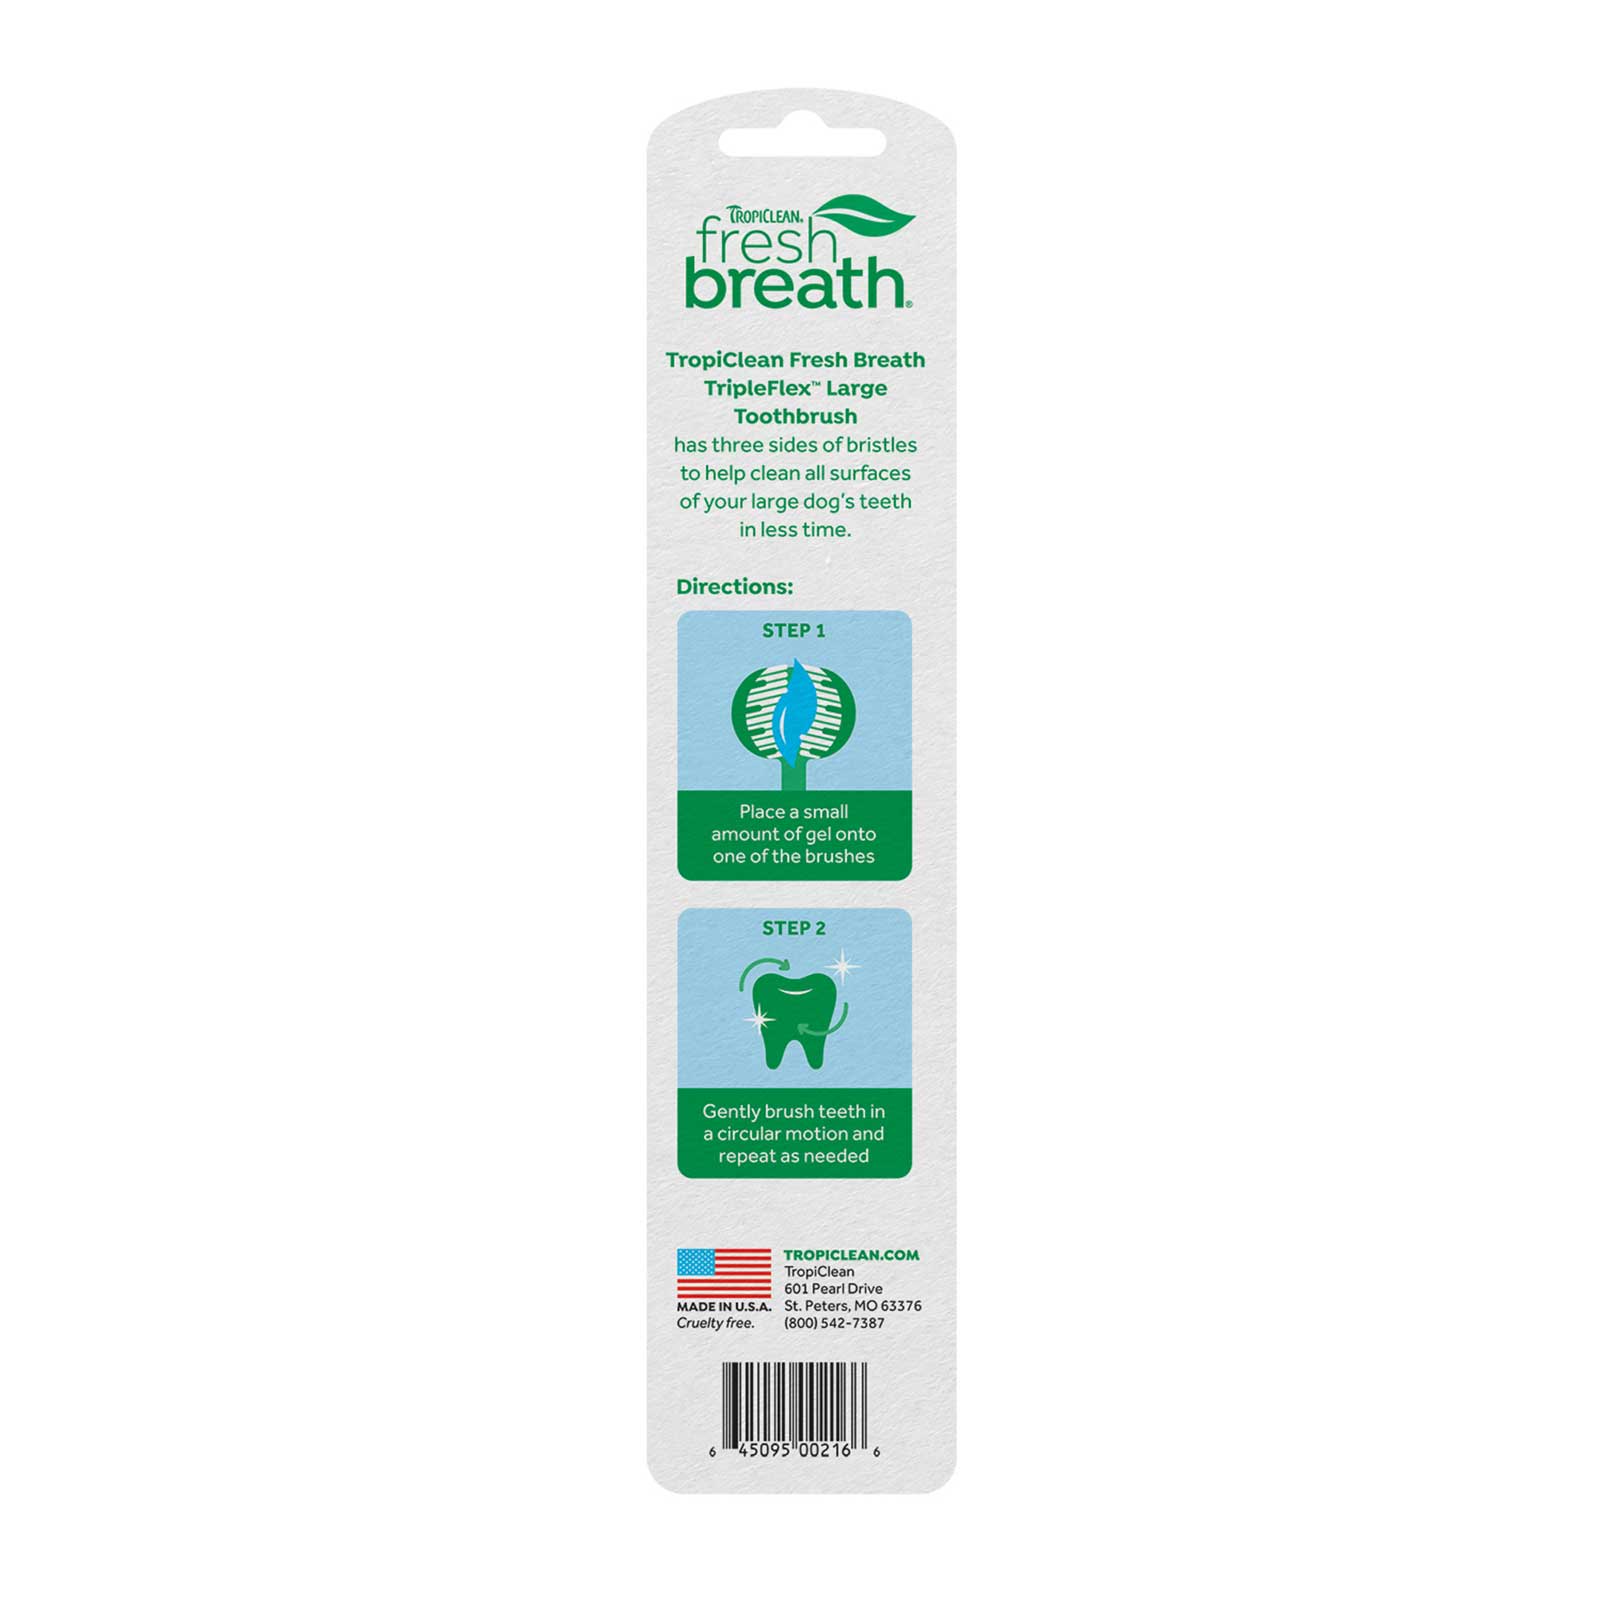 TropiClean Fresh Breath TripleFlex Toothbrush for Dogs